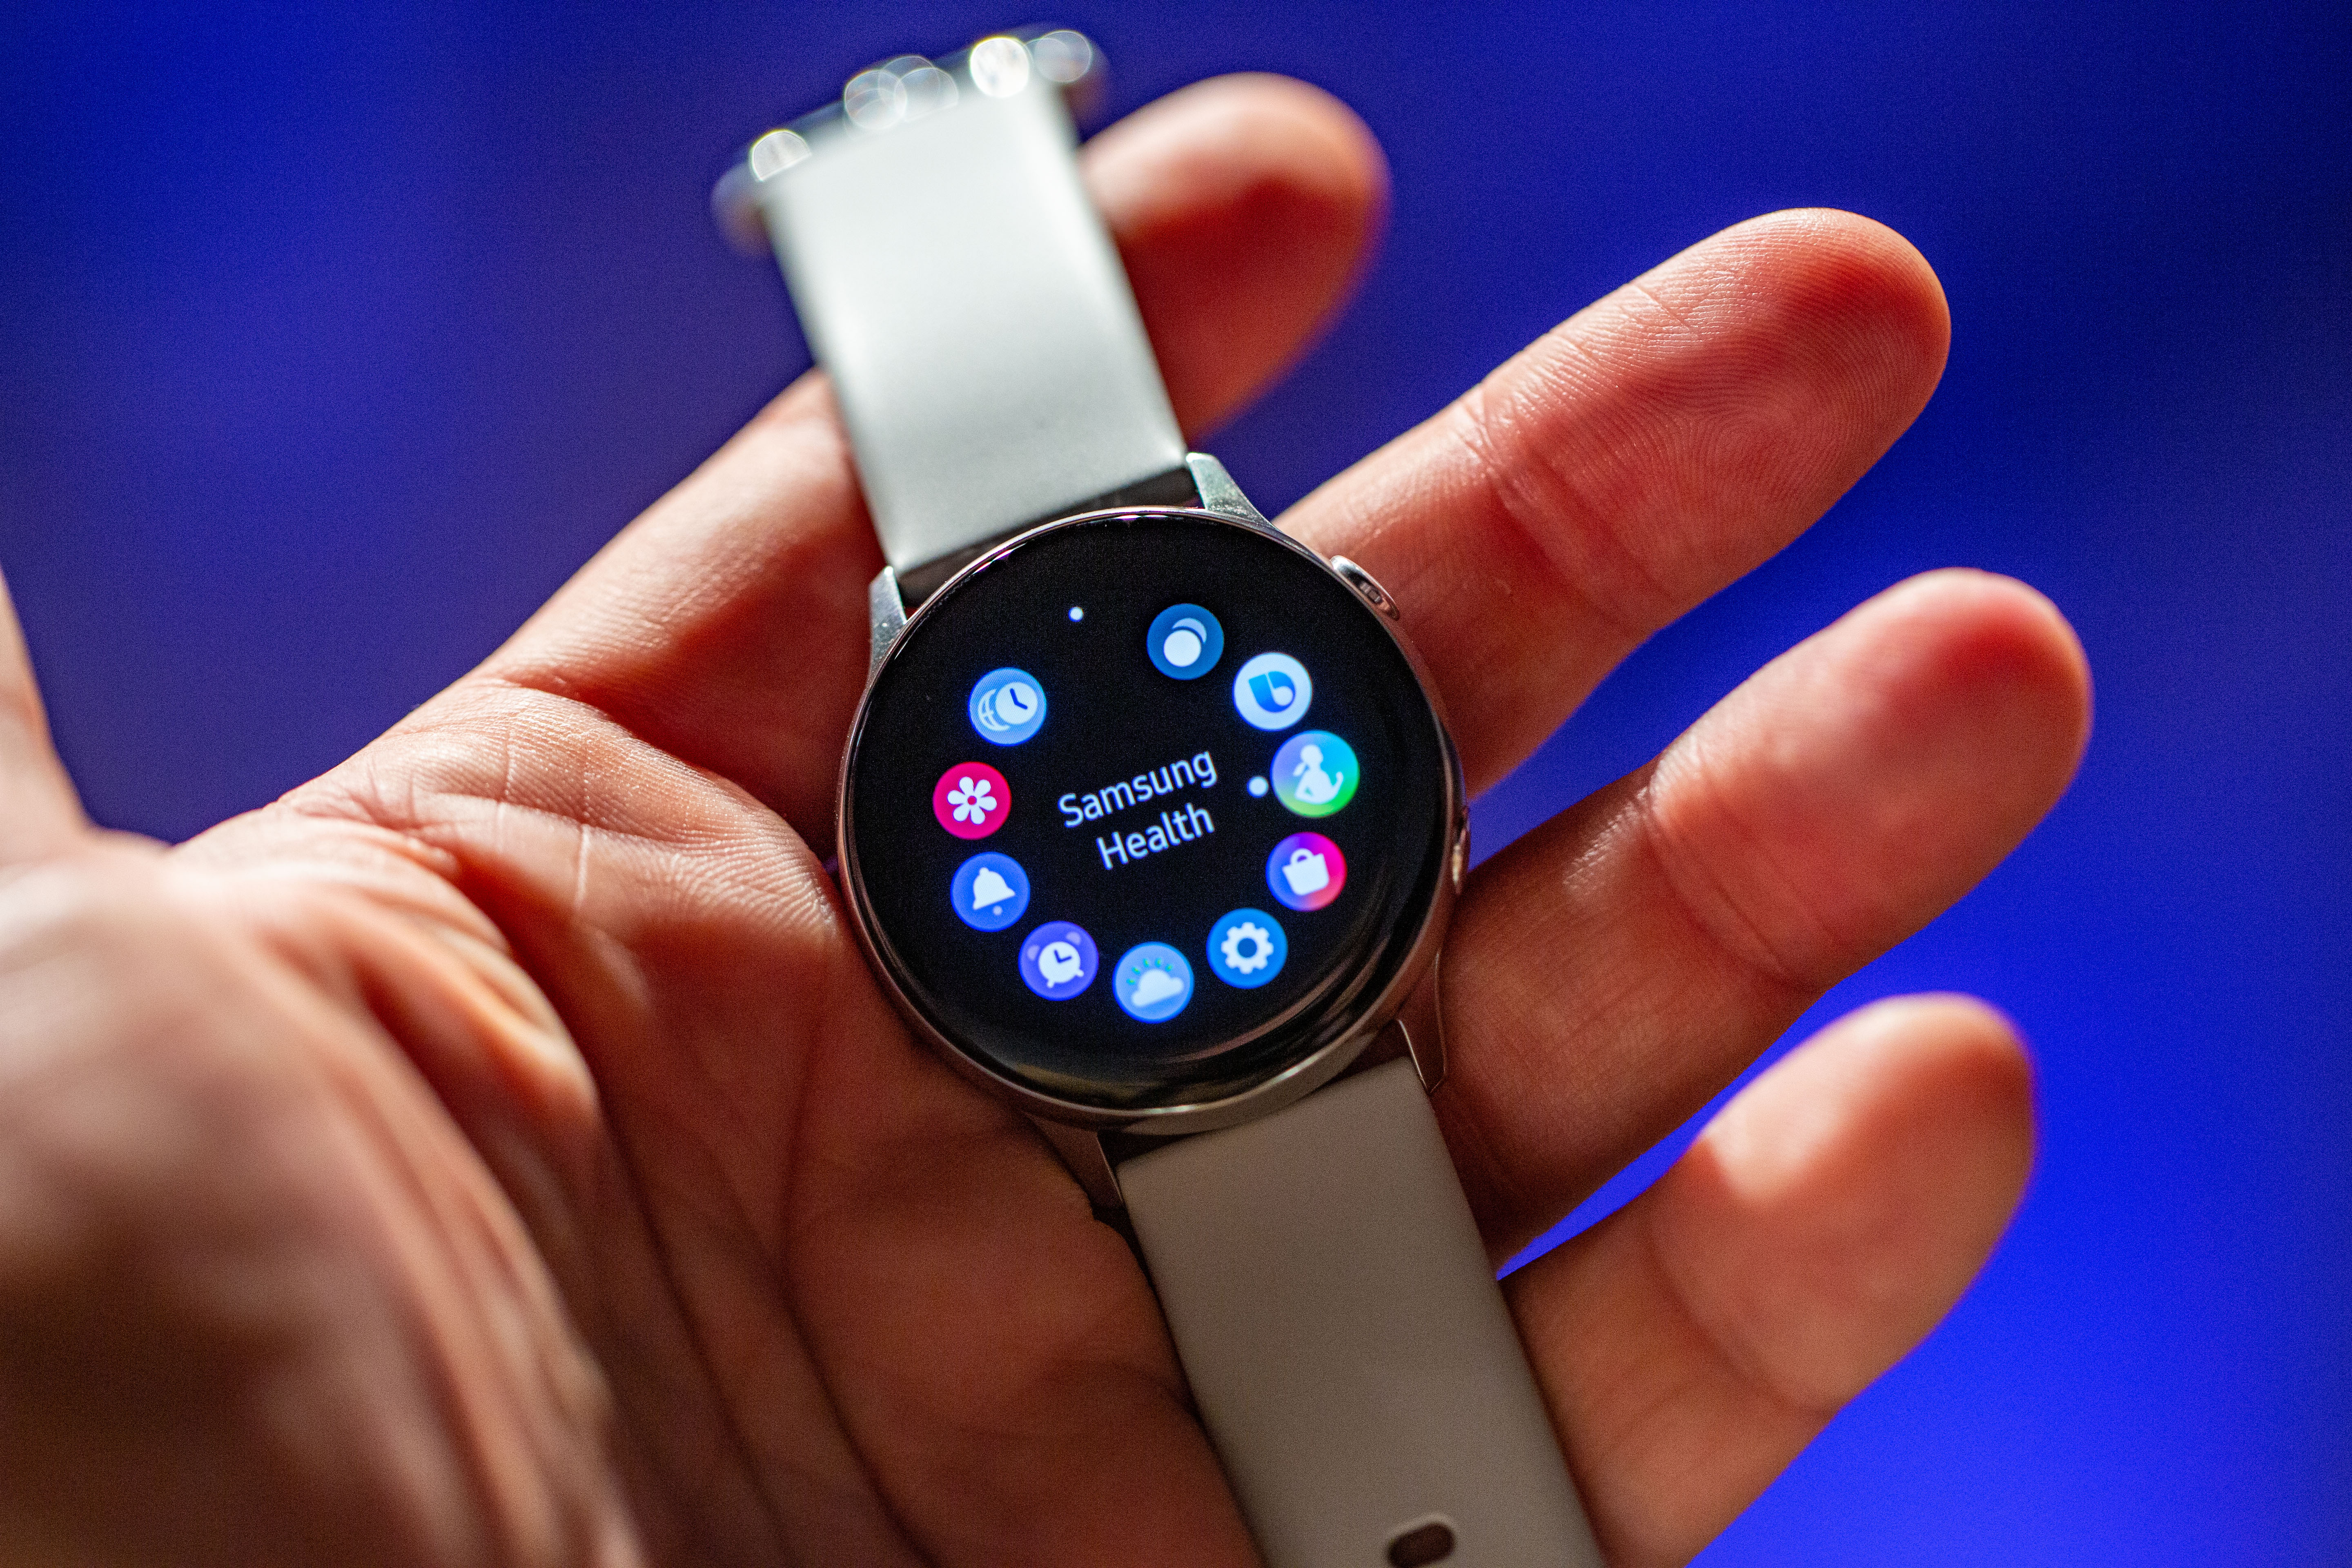 Galaxy watch wifi. Samsung Galaxy watch Active SM-r500. Samsung Galaxy watch модель SM-r500. Умные часы самсунг s10. Смарт часы самсунг 2022.